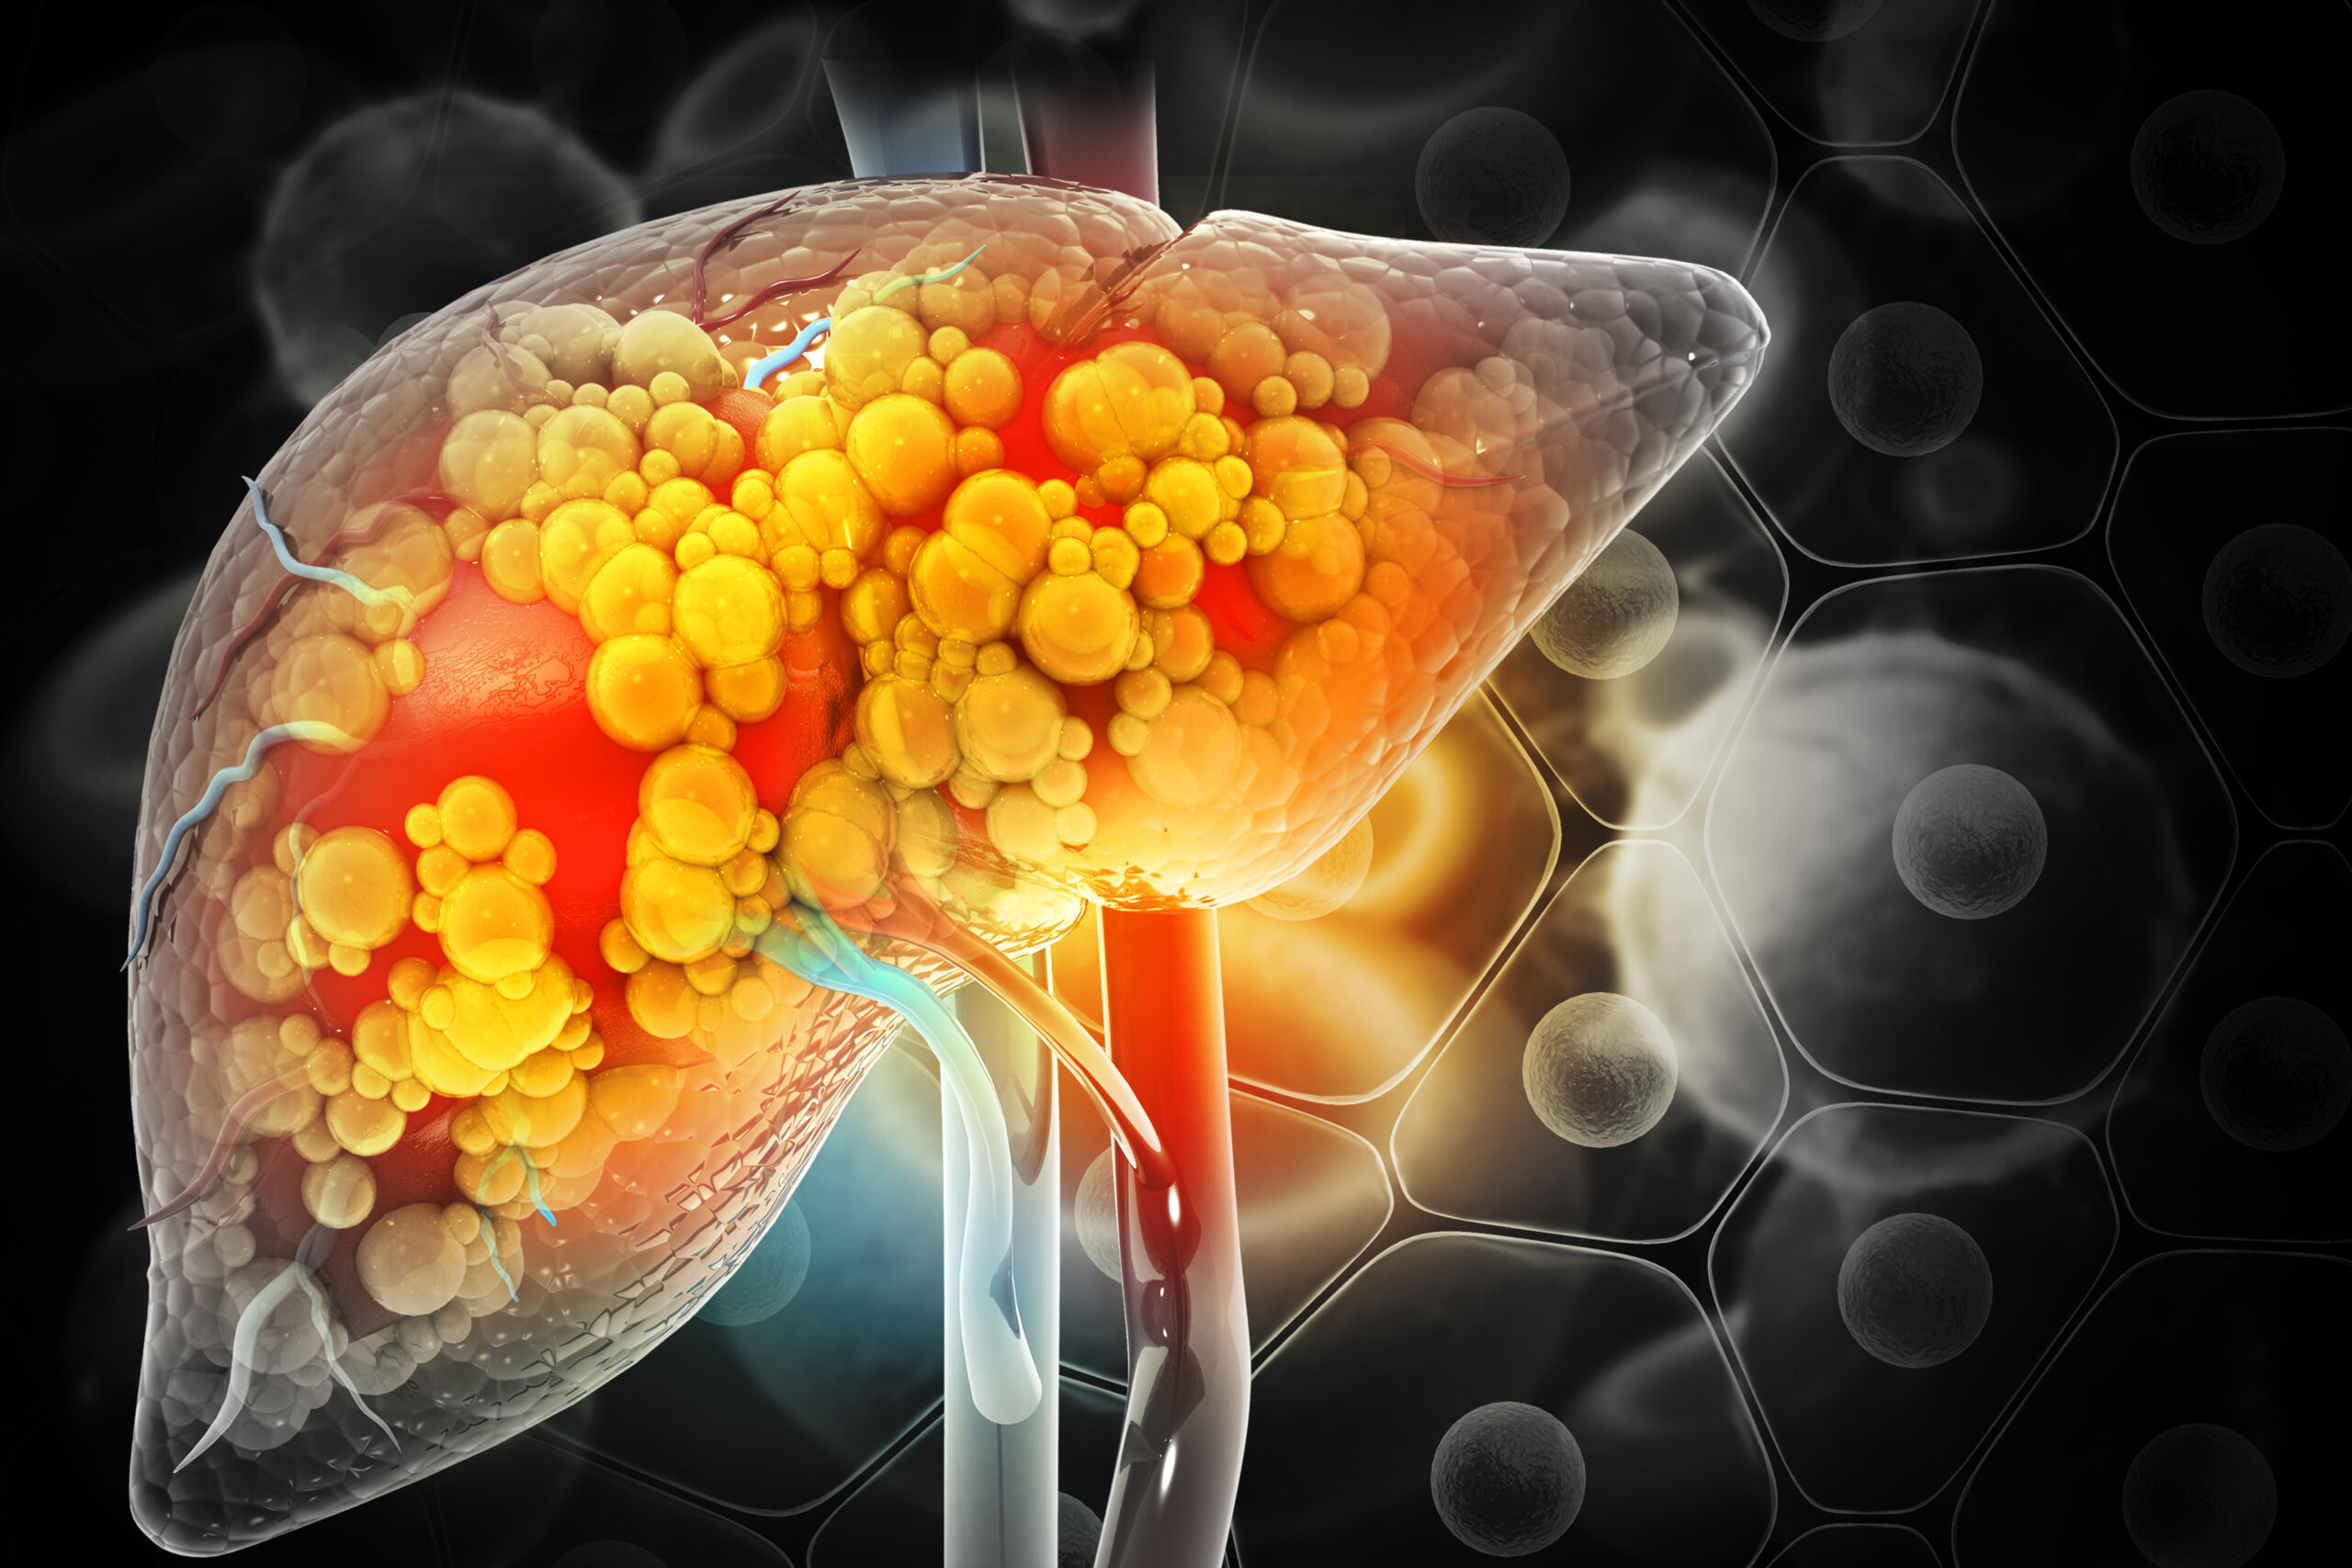 Liver damage such as Fatty liver, Fibrosis, Cirrhosis, and Liver cancer. 3d illustration